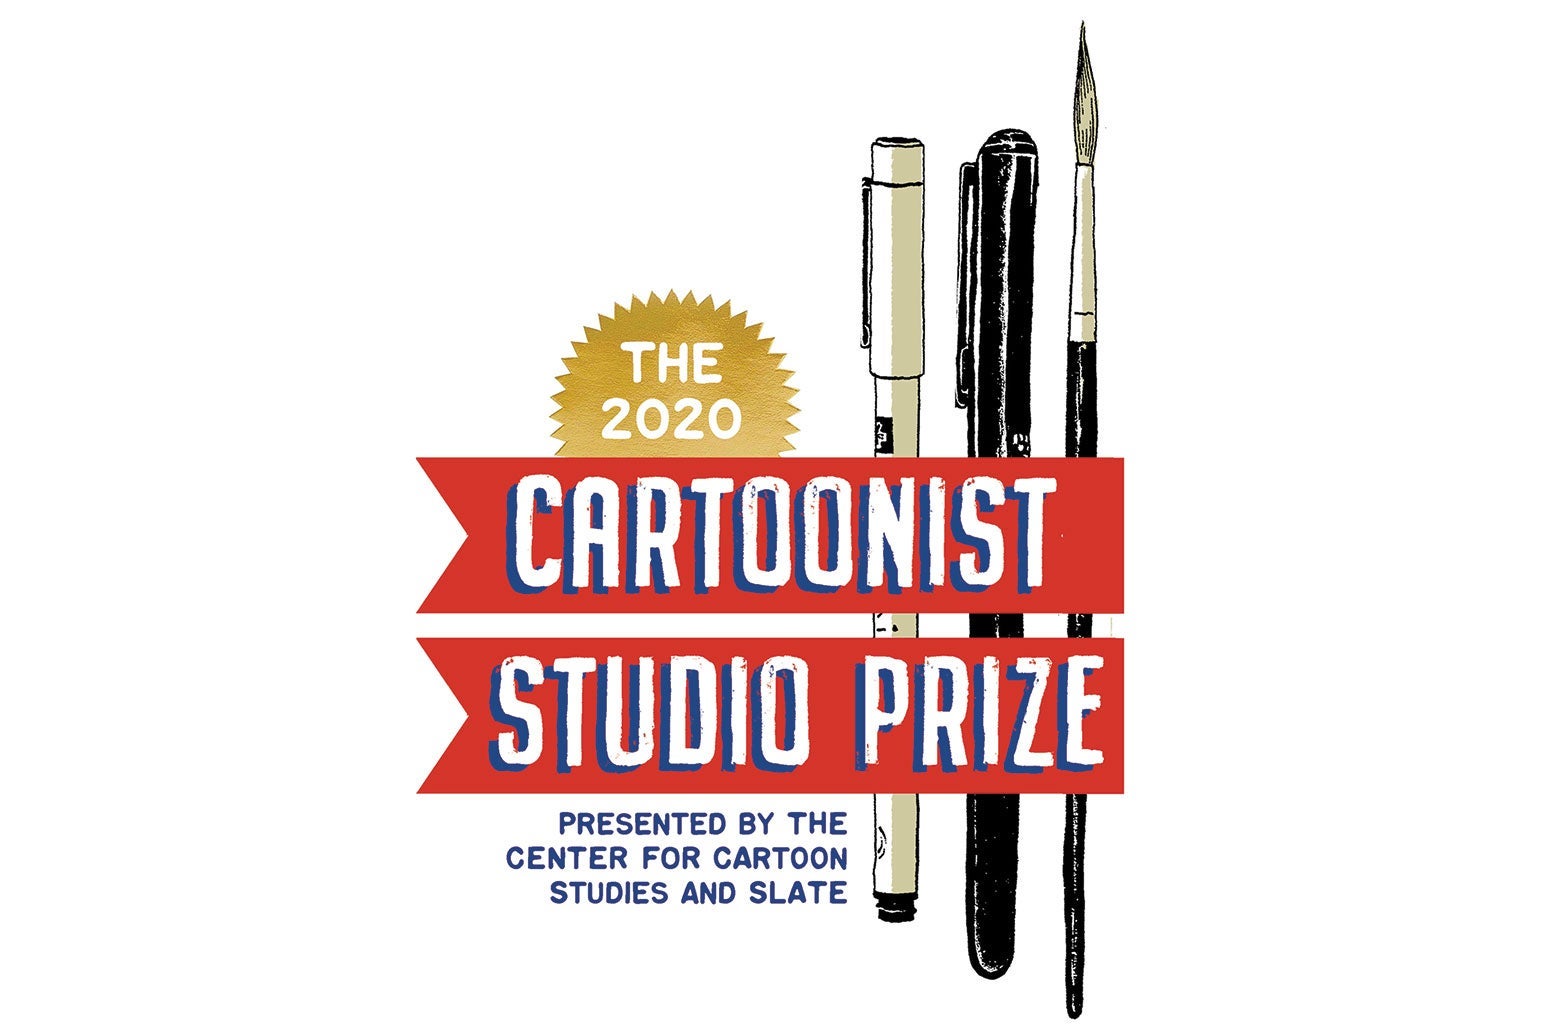 The logo of the Cartoonist Studio Prize.